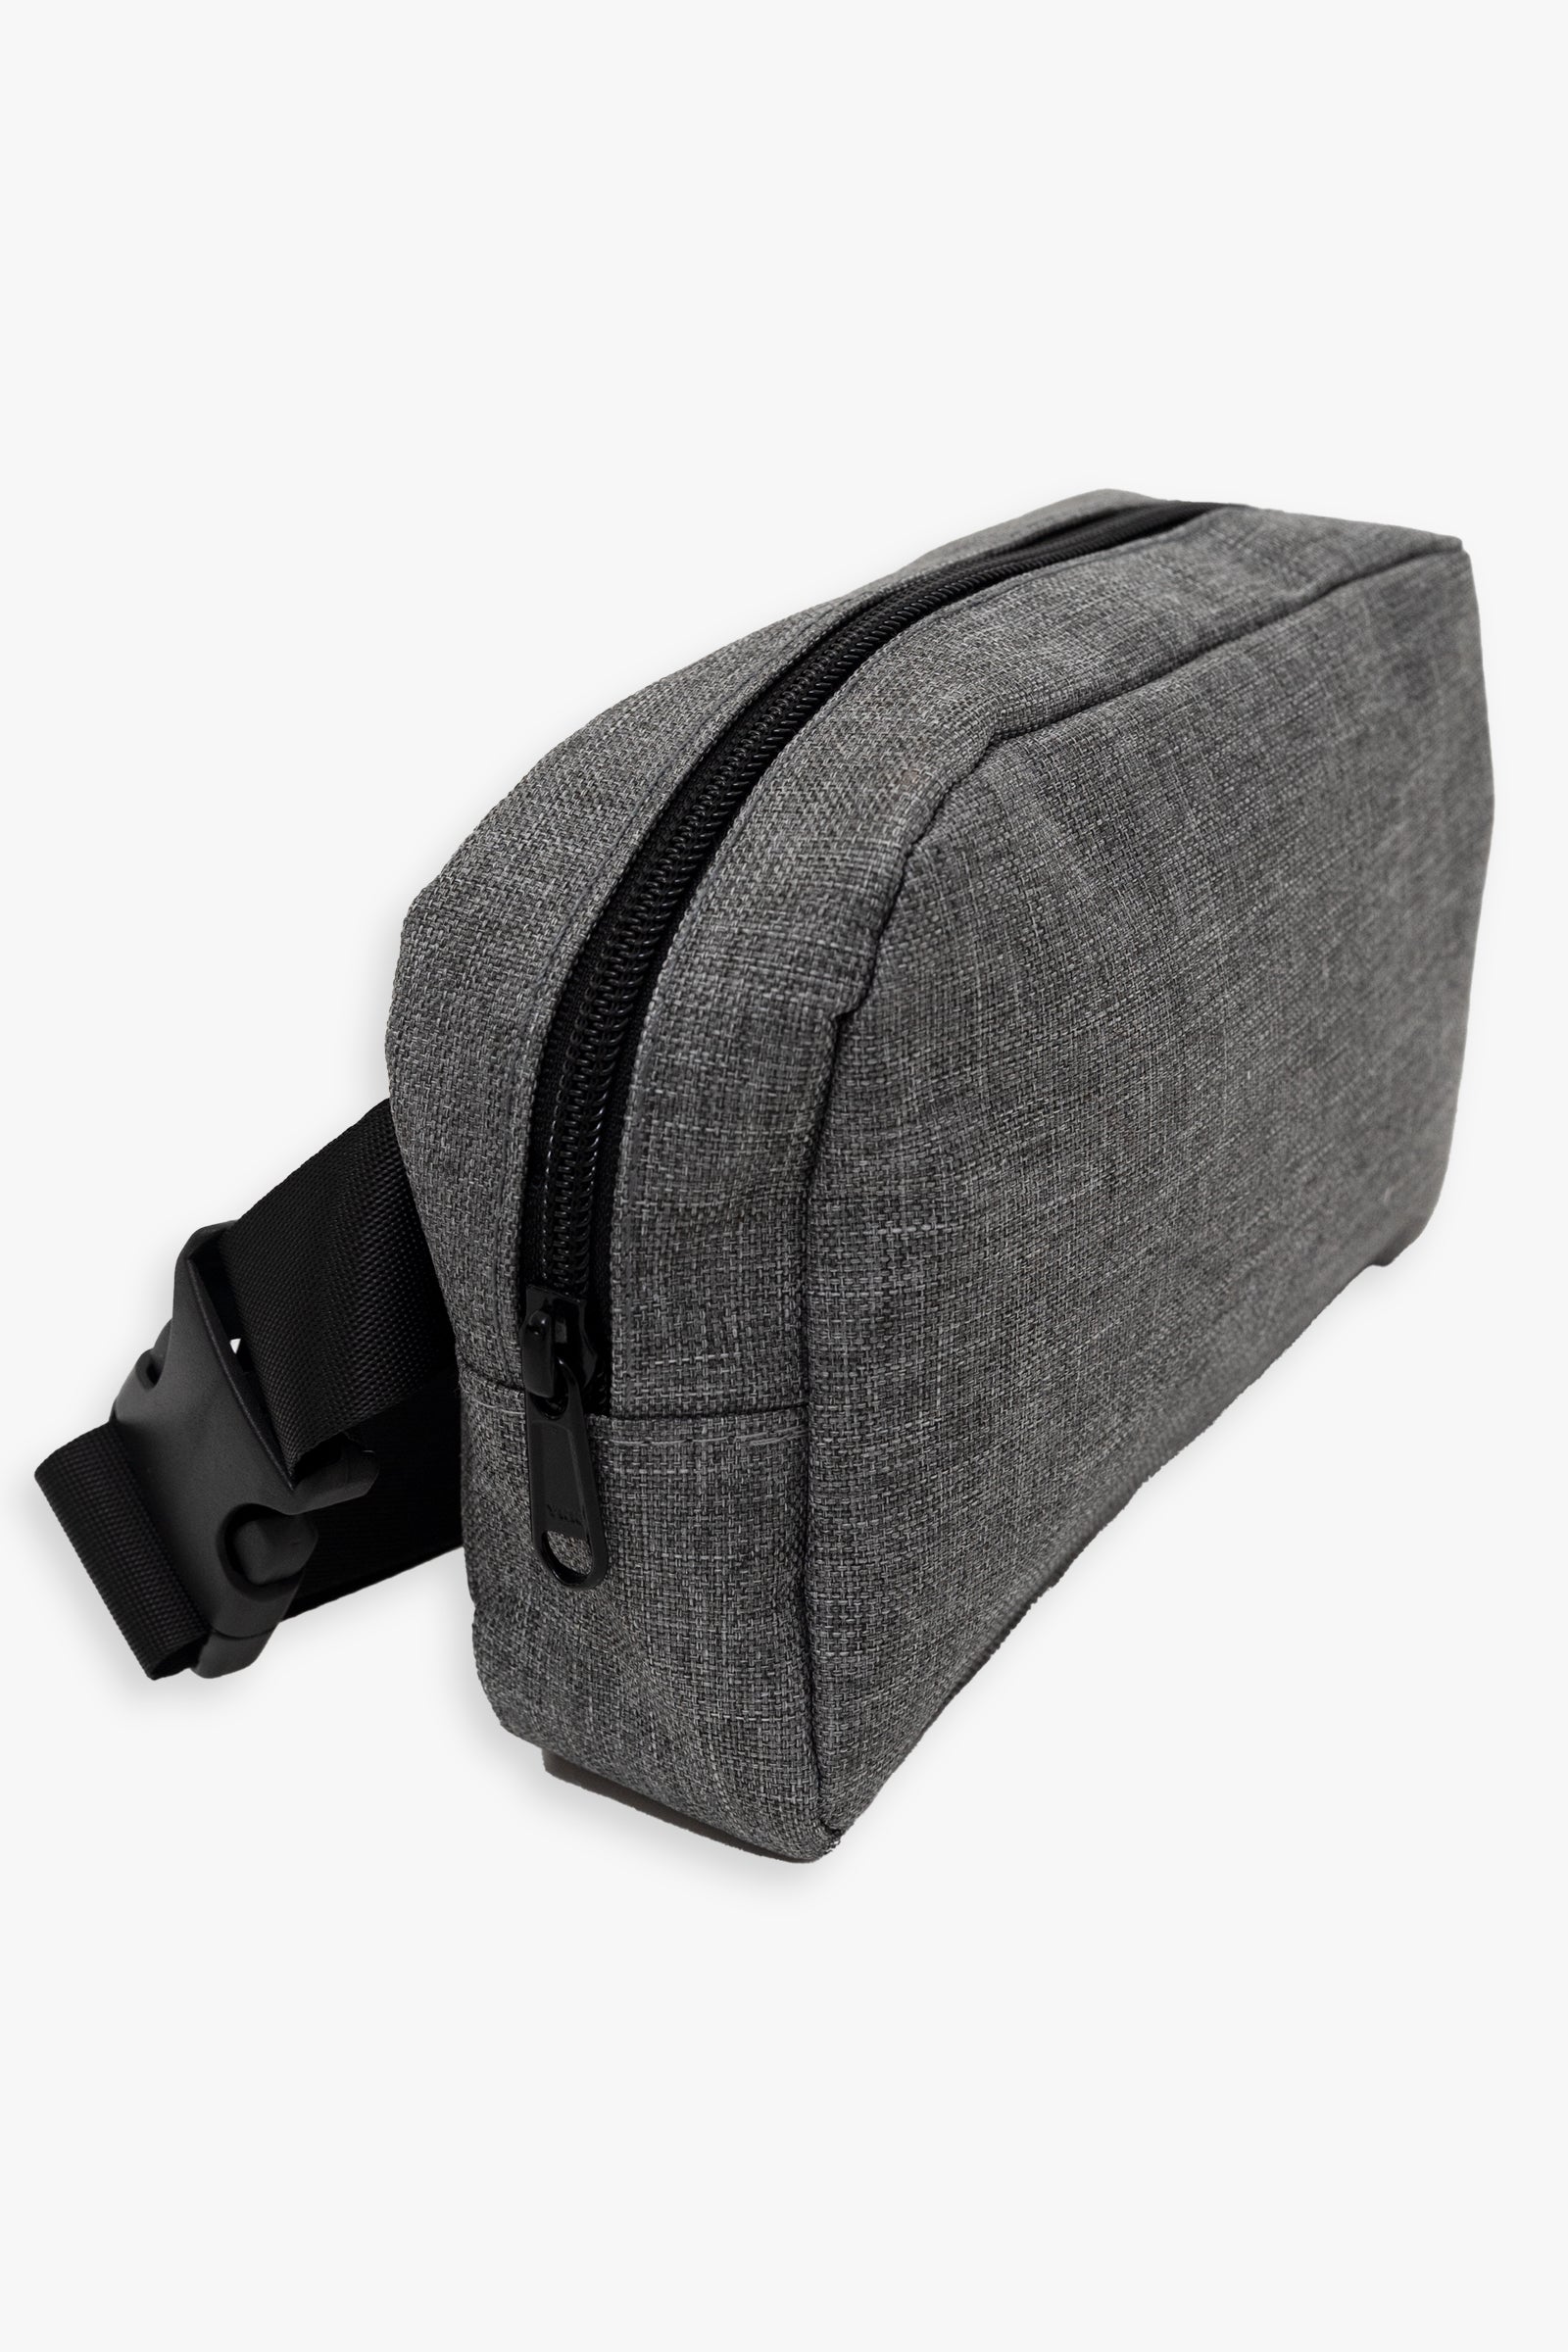 Gertex Customizable Grey Belt Bag